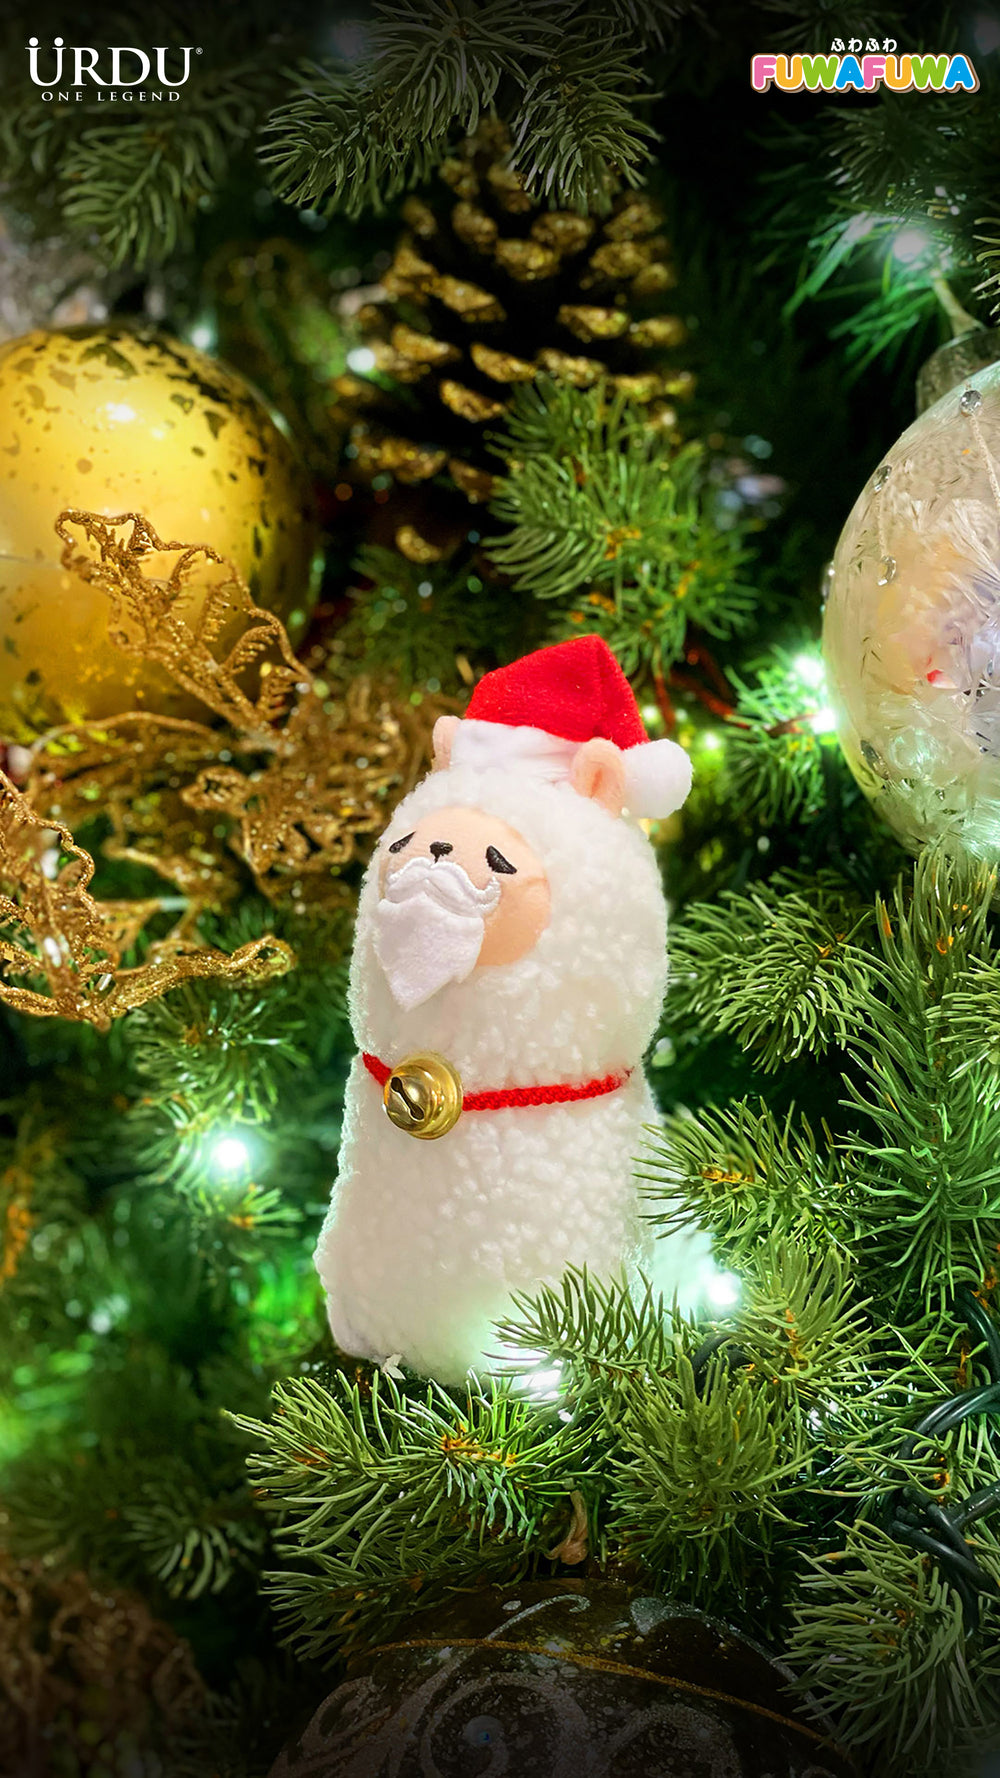 URDU Fuwafuwa X'Mas-Alpaca (Santa Claus)